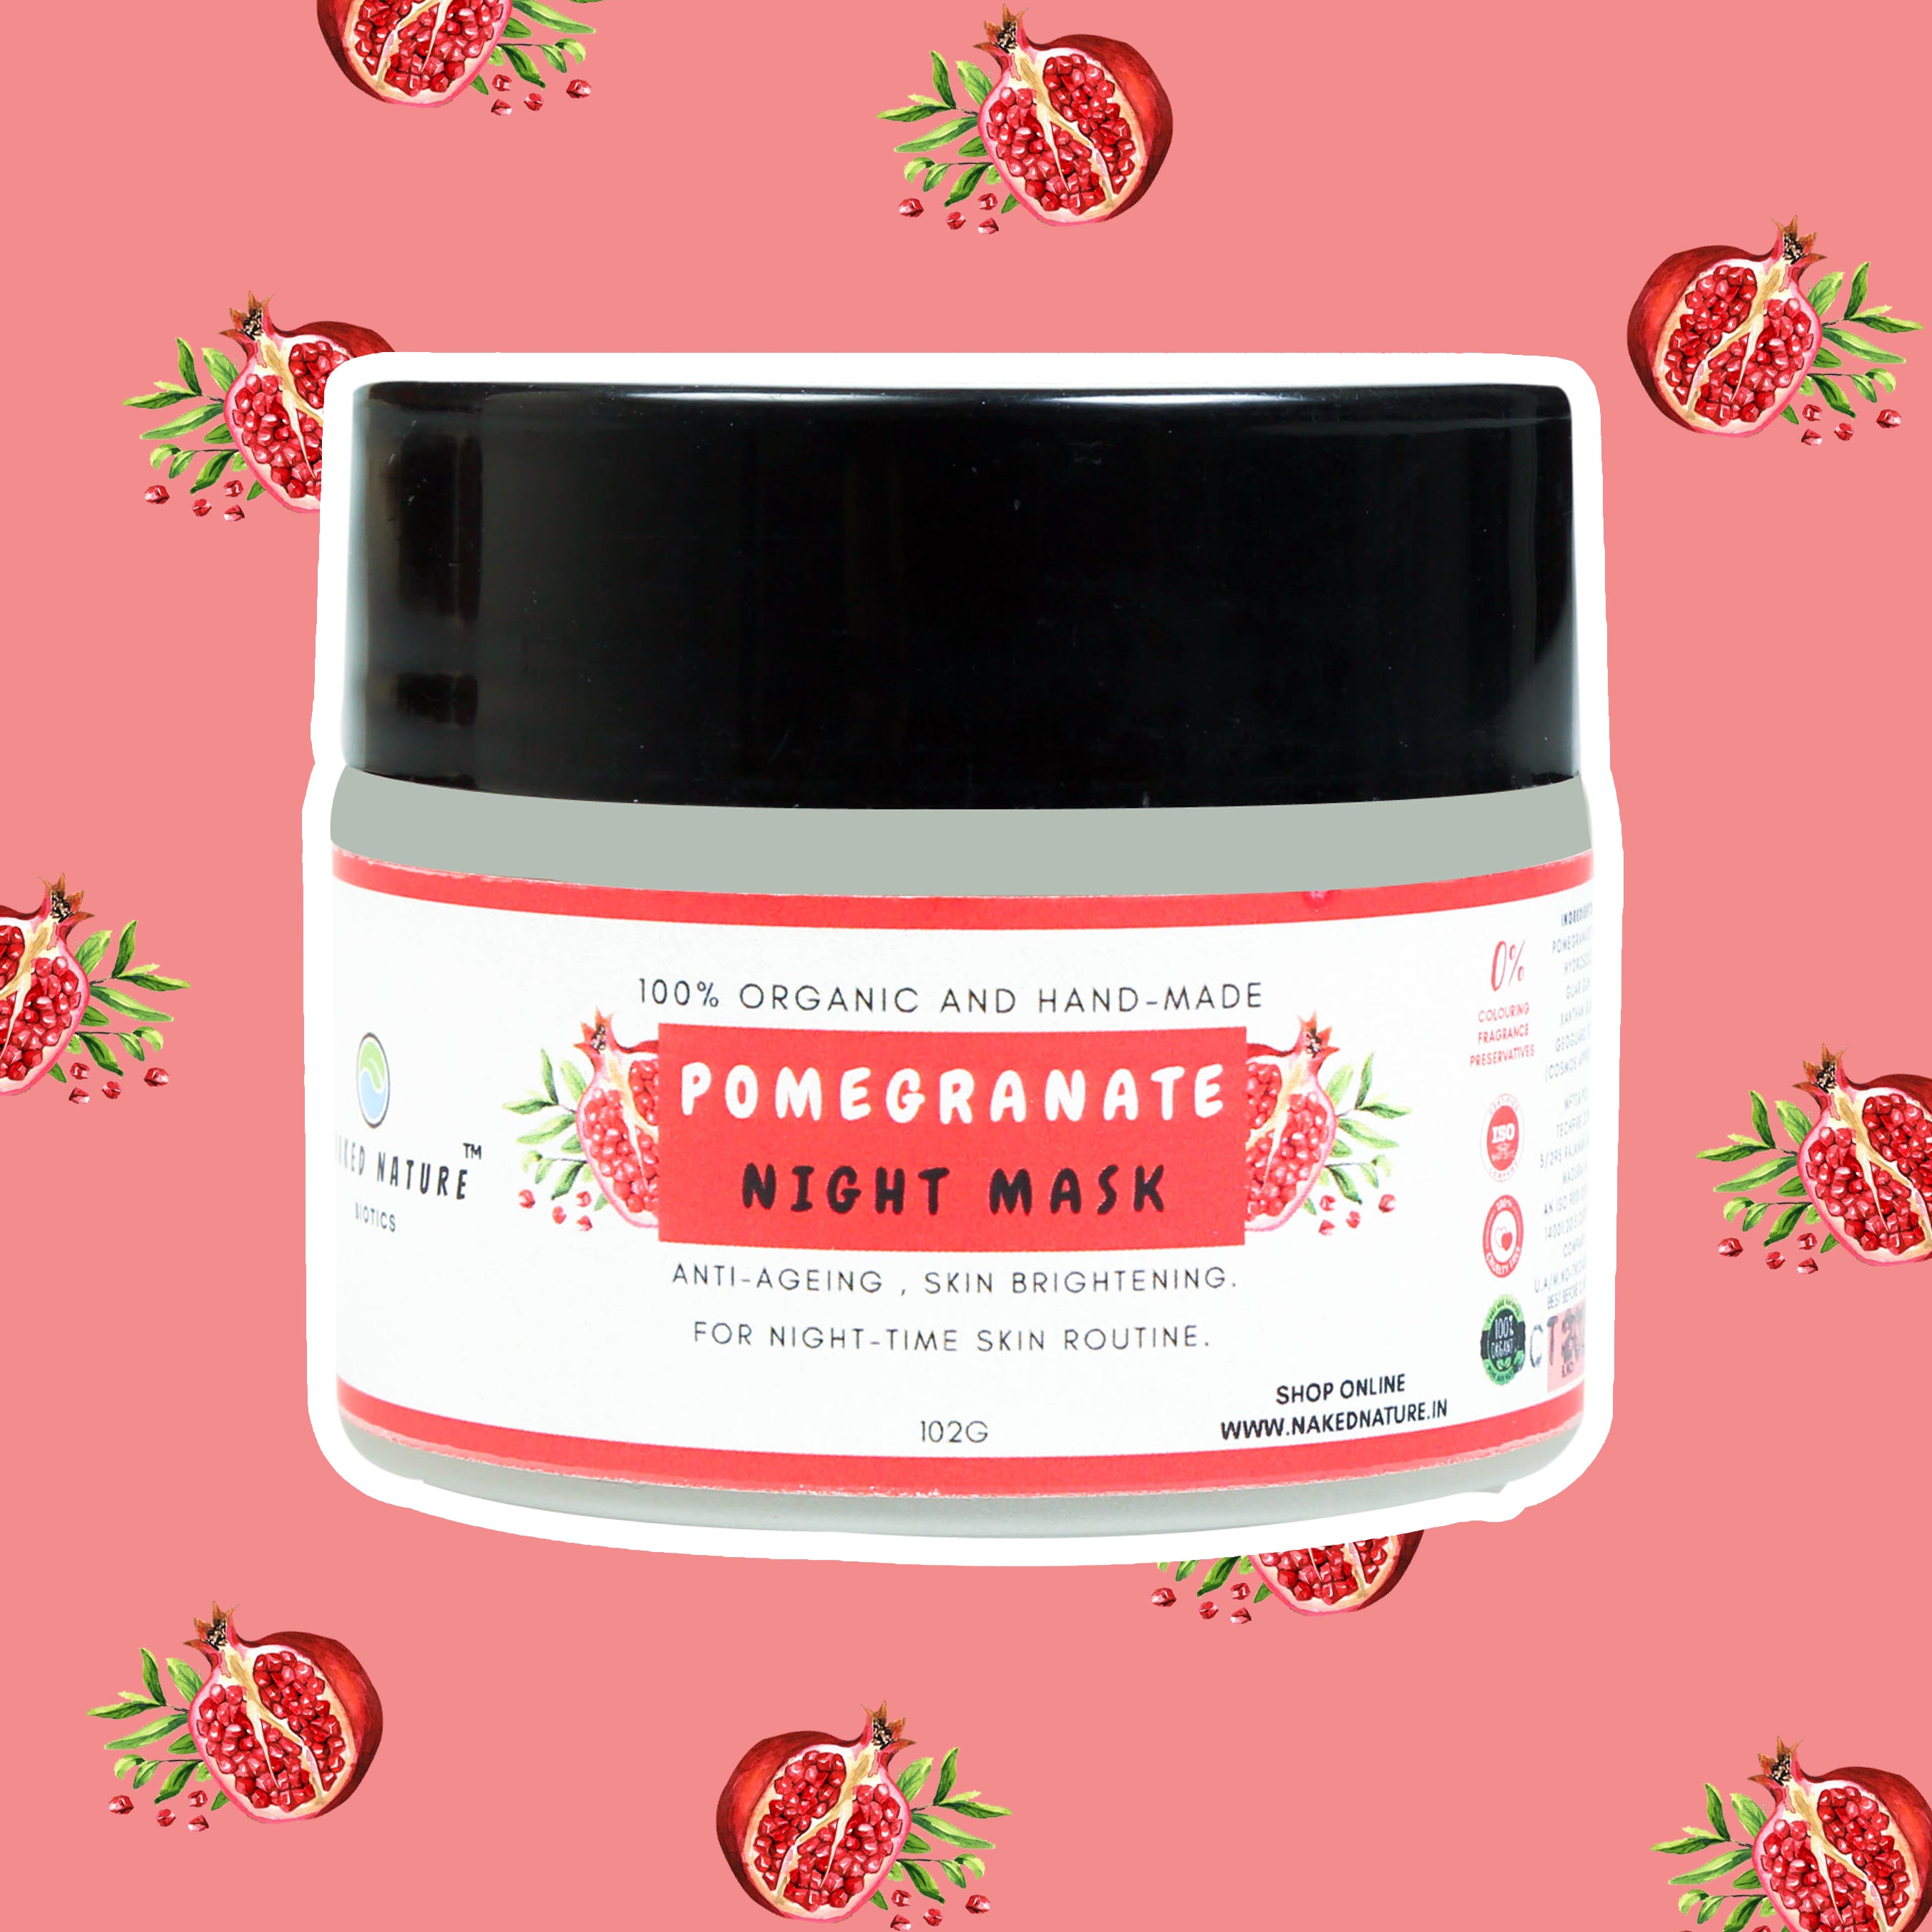 Pomegranate Night Mask (102G) - For Dullness, Anti-Ageing and Skin Brightness.